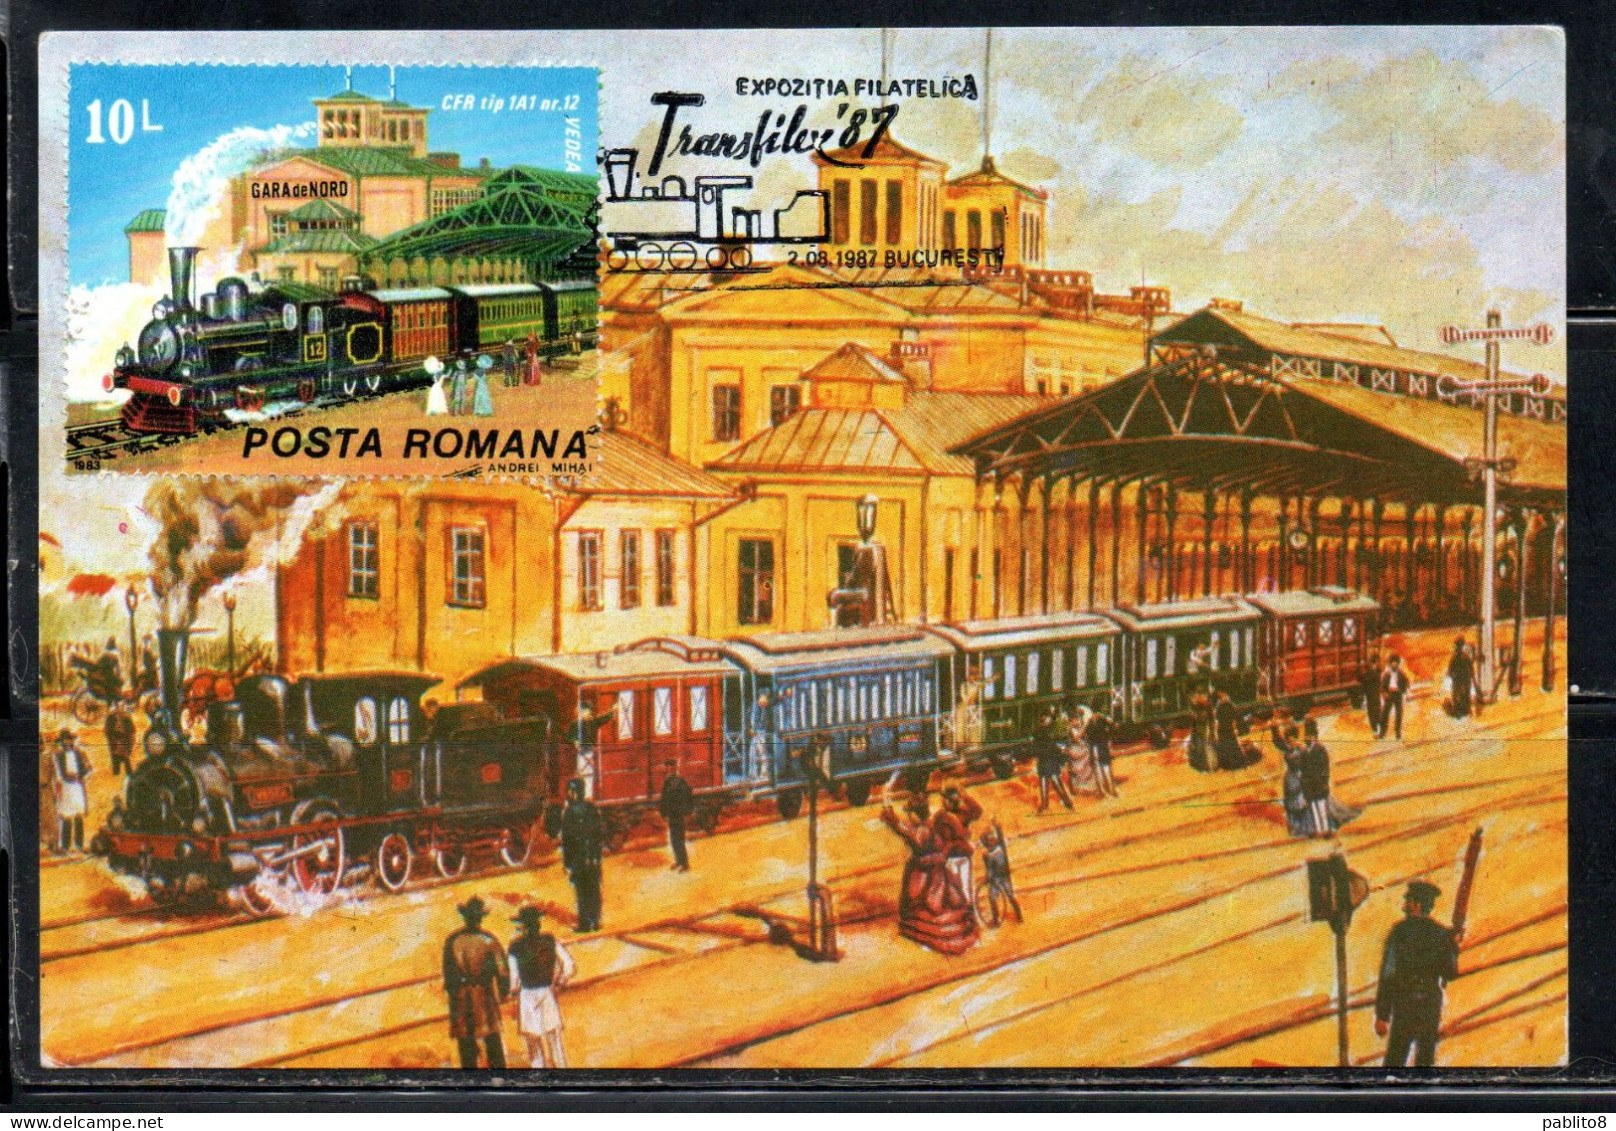 ROMANIA 1983  TRAIN STATION LEAVING GARE DE NORD CFR 1A1 ORIENT EXPRESS CENTENARY 10L MAXI MAXIMUM CARD - Maximum Cards & Covers